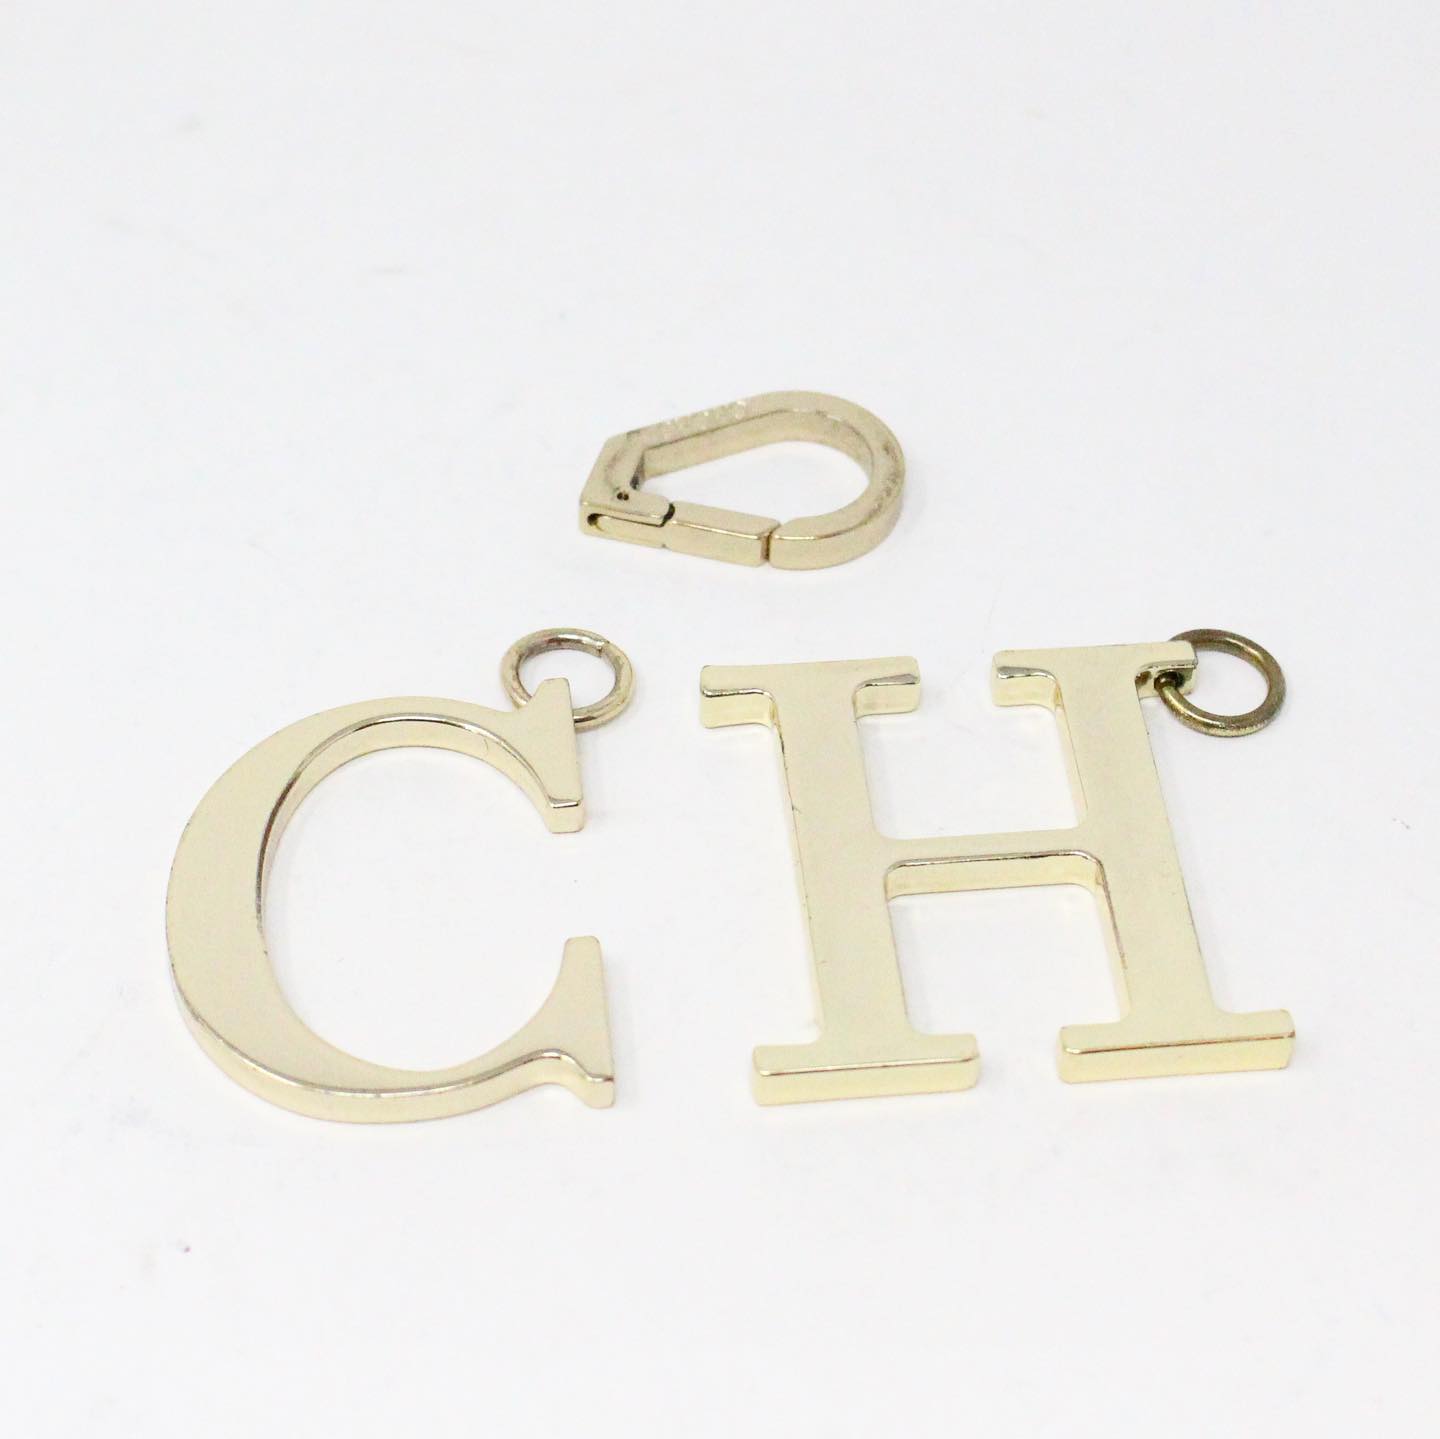  Gold Tone Letter C Keychain for Women Purse Handbags